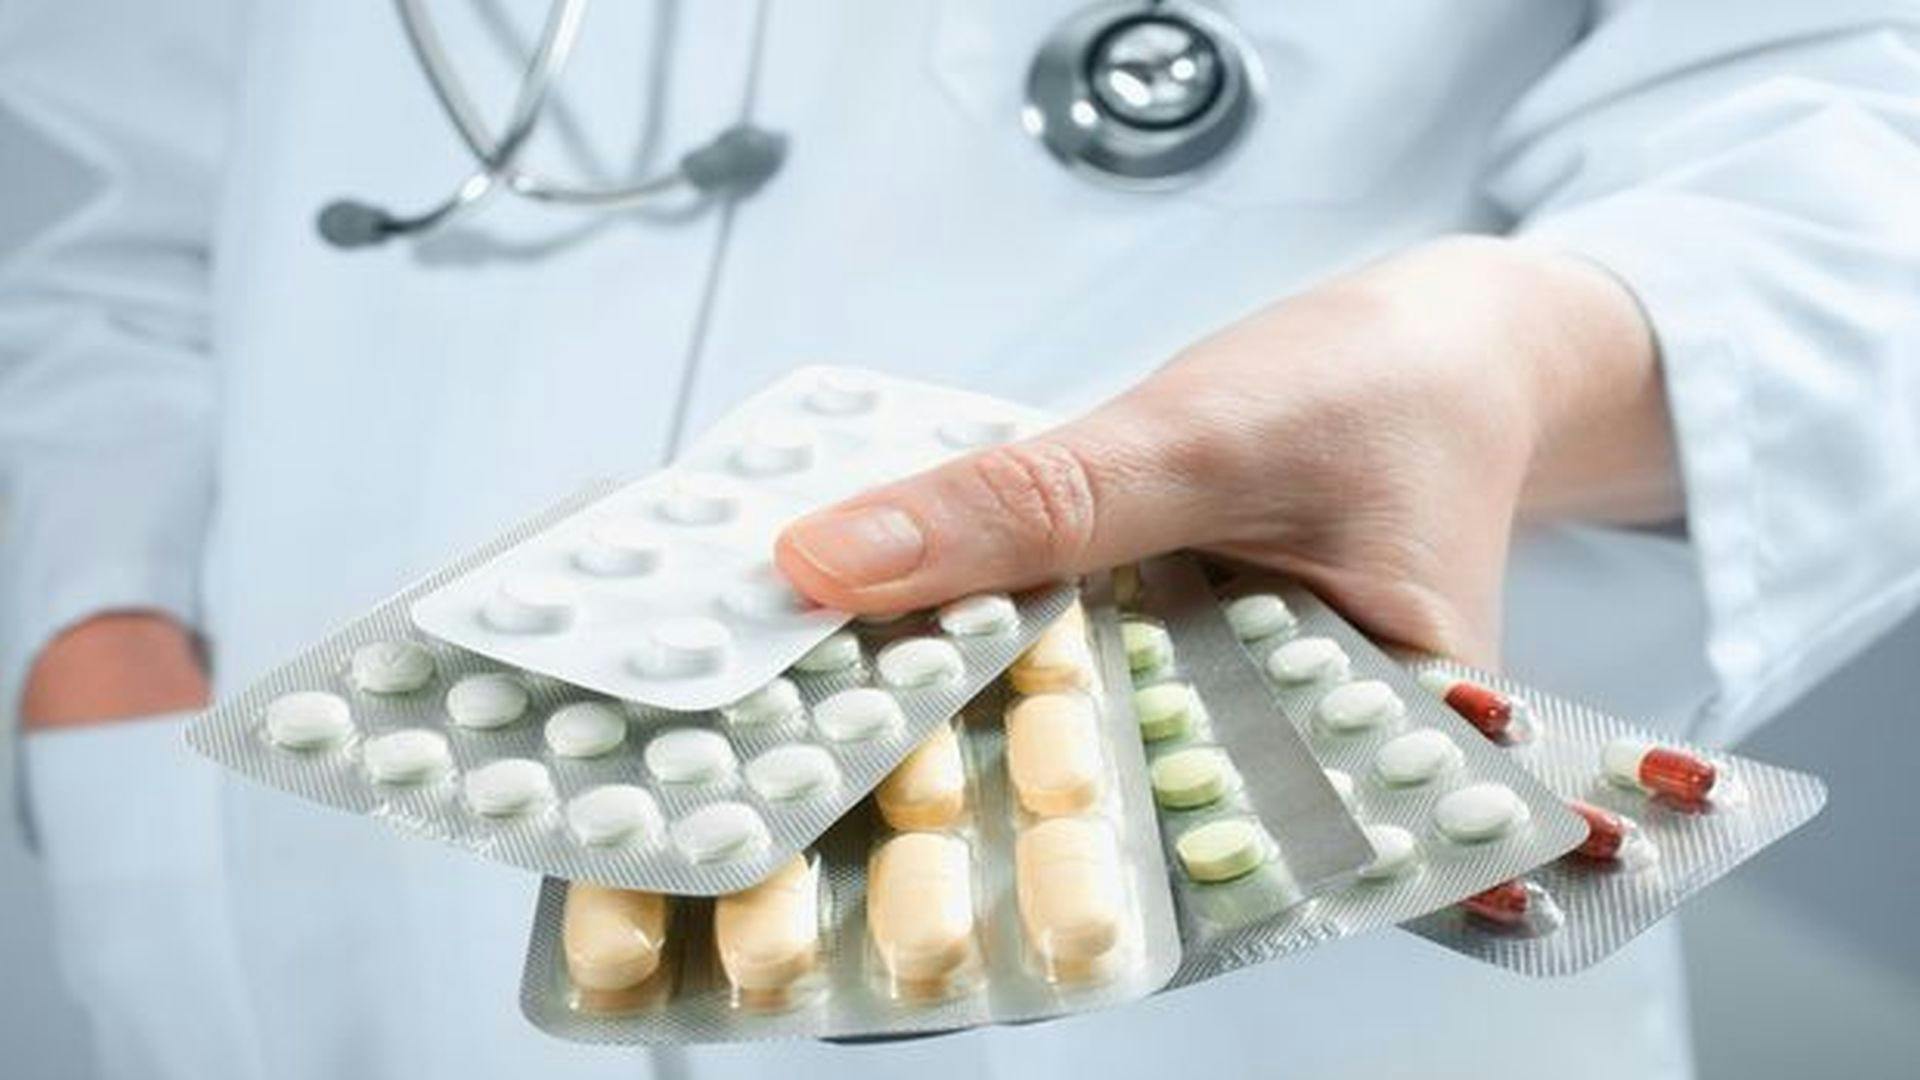 WHO Updates Essential Medicines List With New Advice on Antibiotics Use